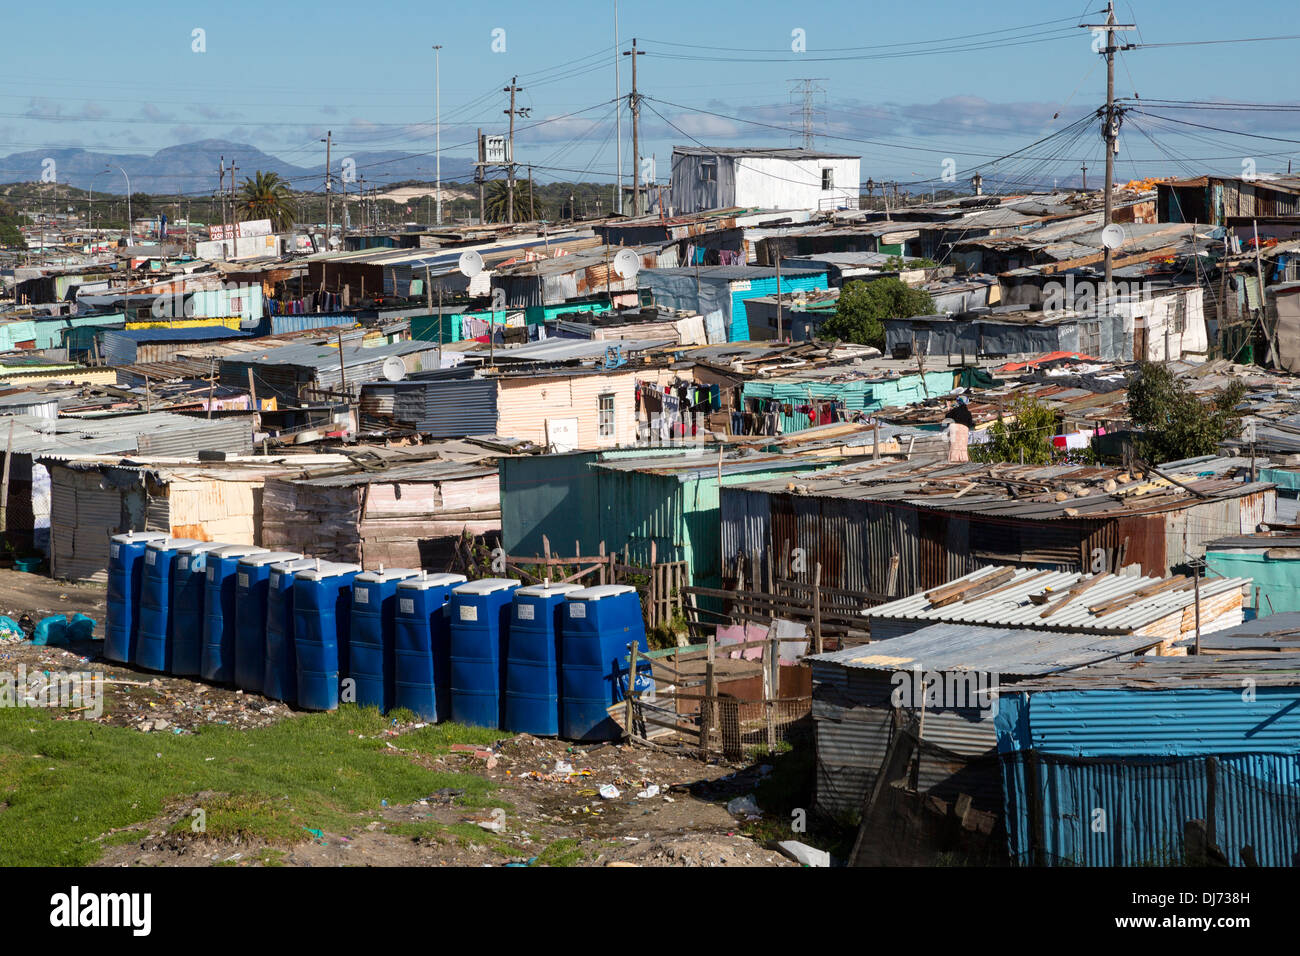 Südafrika, Cape Town, Khayelitsha Township. Blau tragbare Toiletten im Vordergrund. Stockfoto